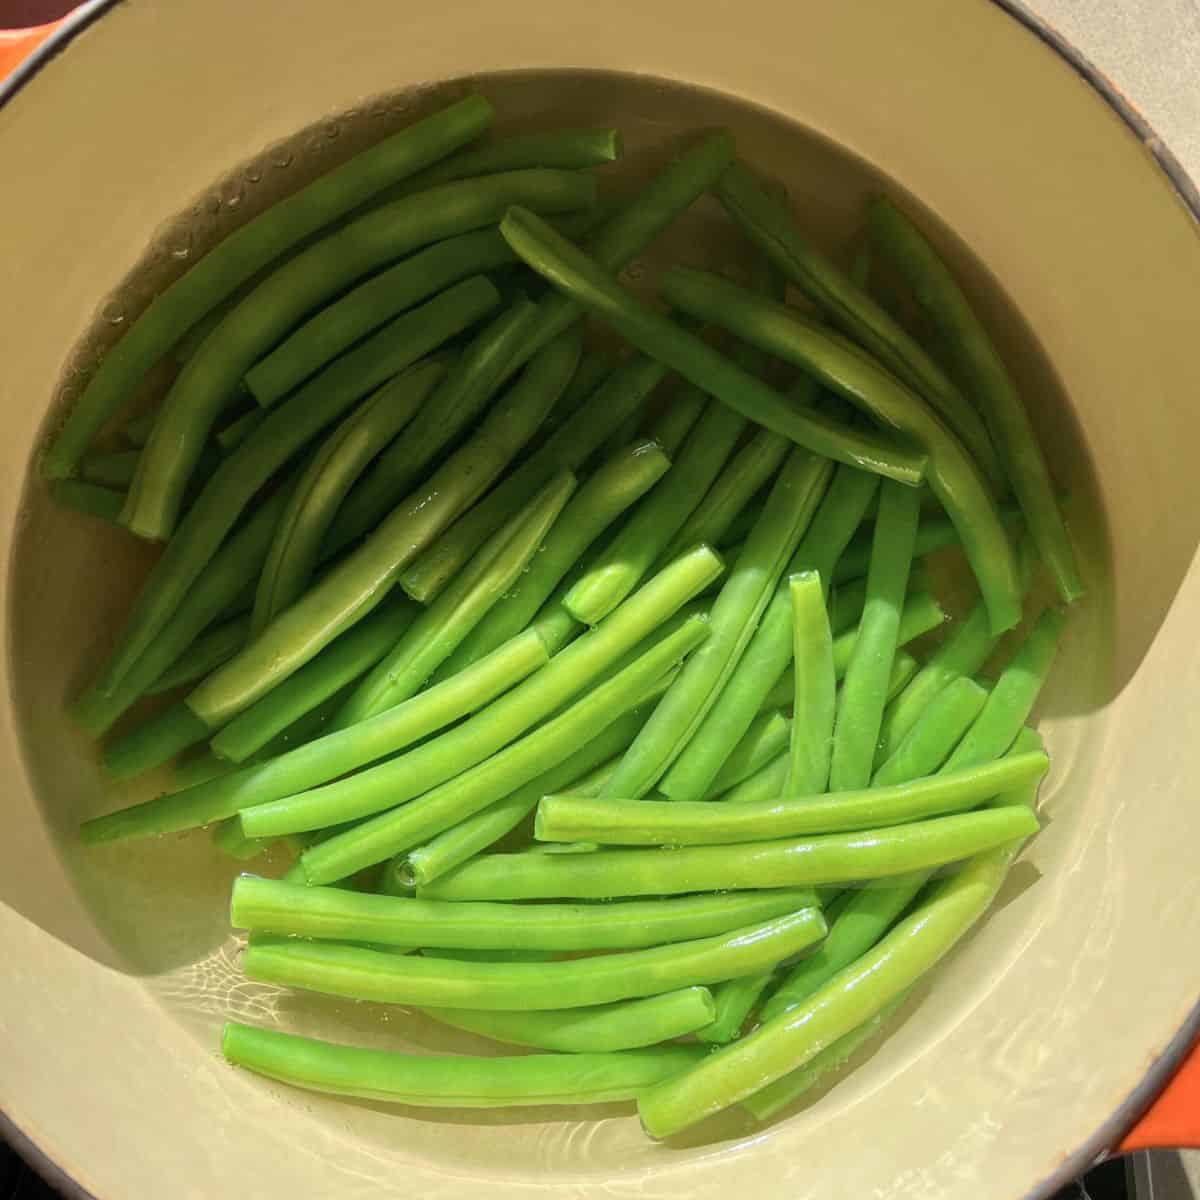 Boiling green beans in a saucepan.